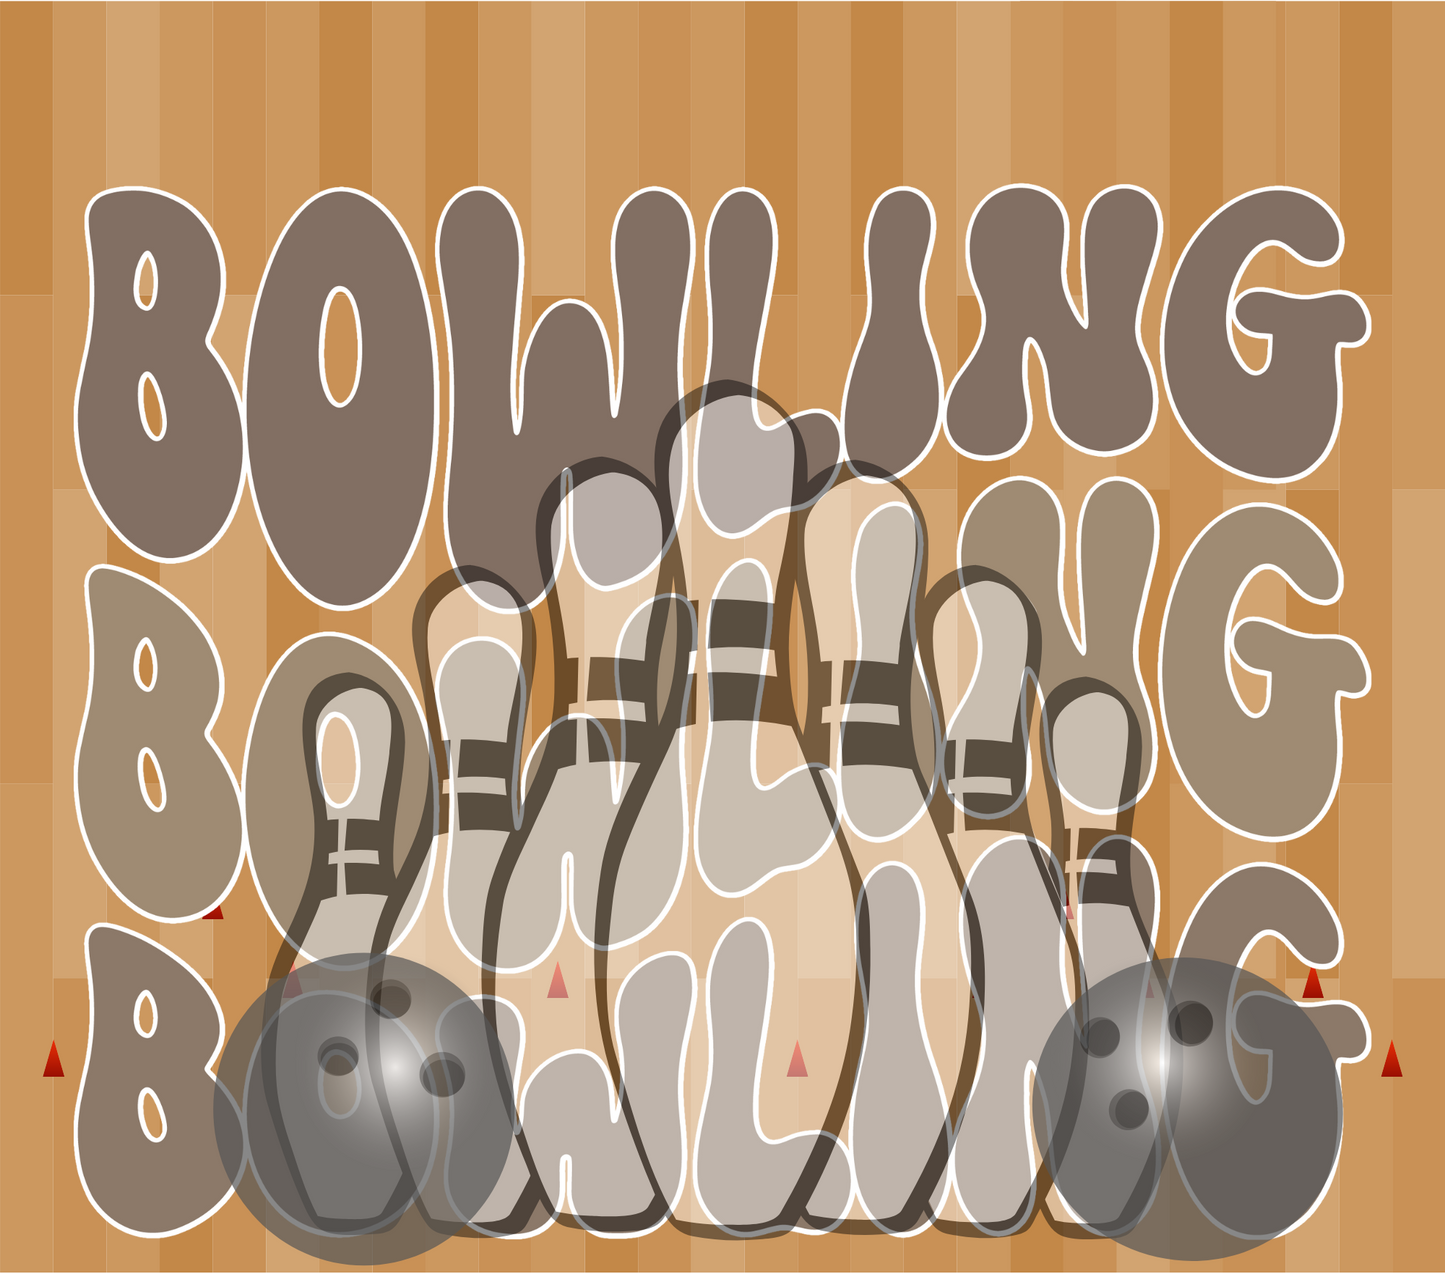 Bowling - 20 Oz Sublimation Transfer